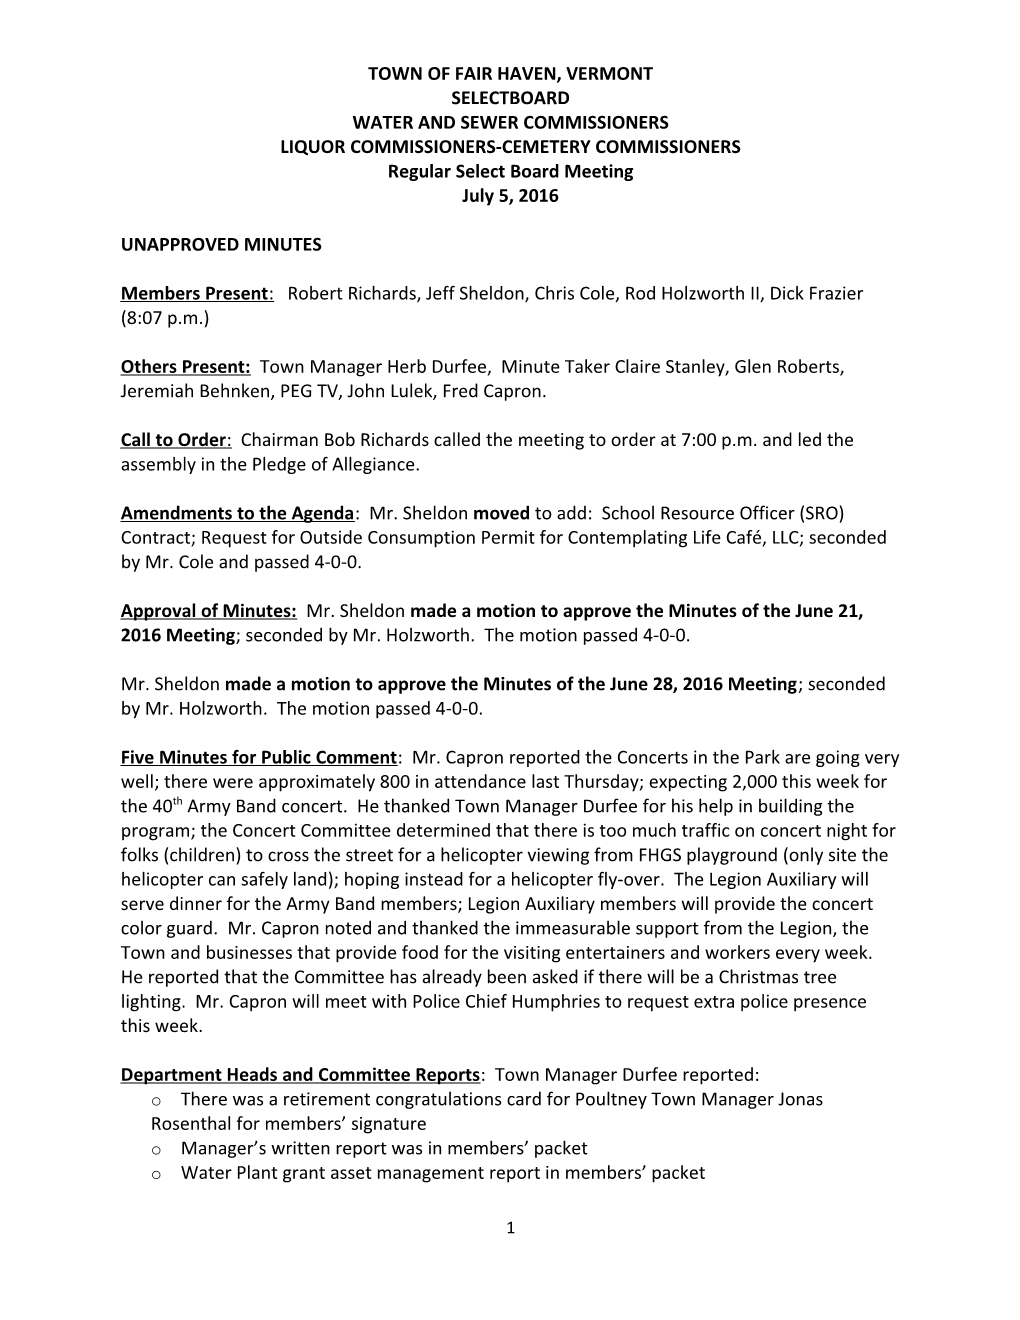 Town of Fair Haven, VT, Selectboard Meeting Minutes, 07/5/16 DRAFT